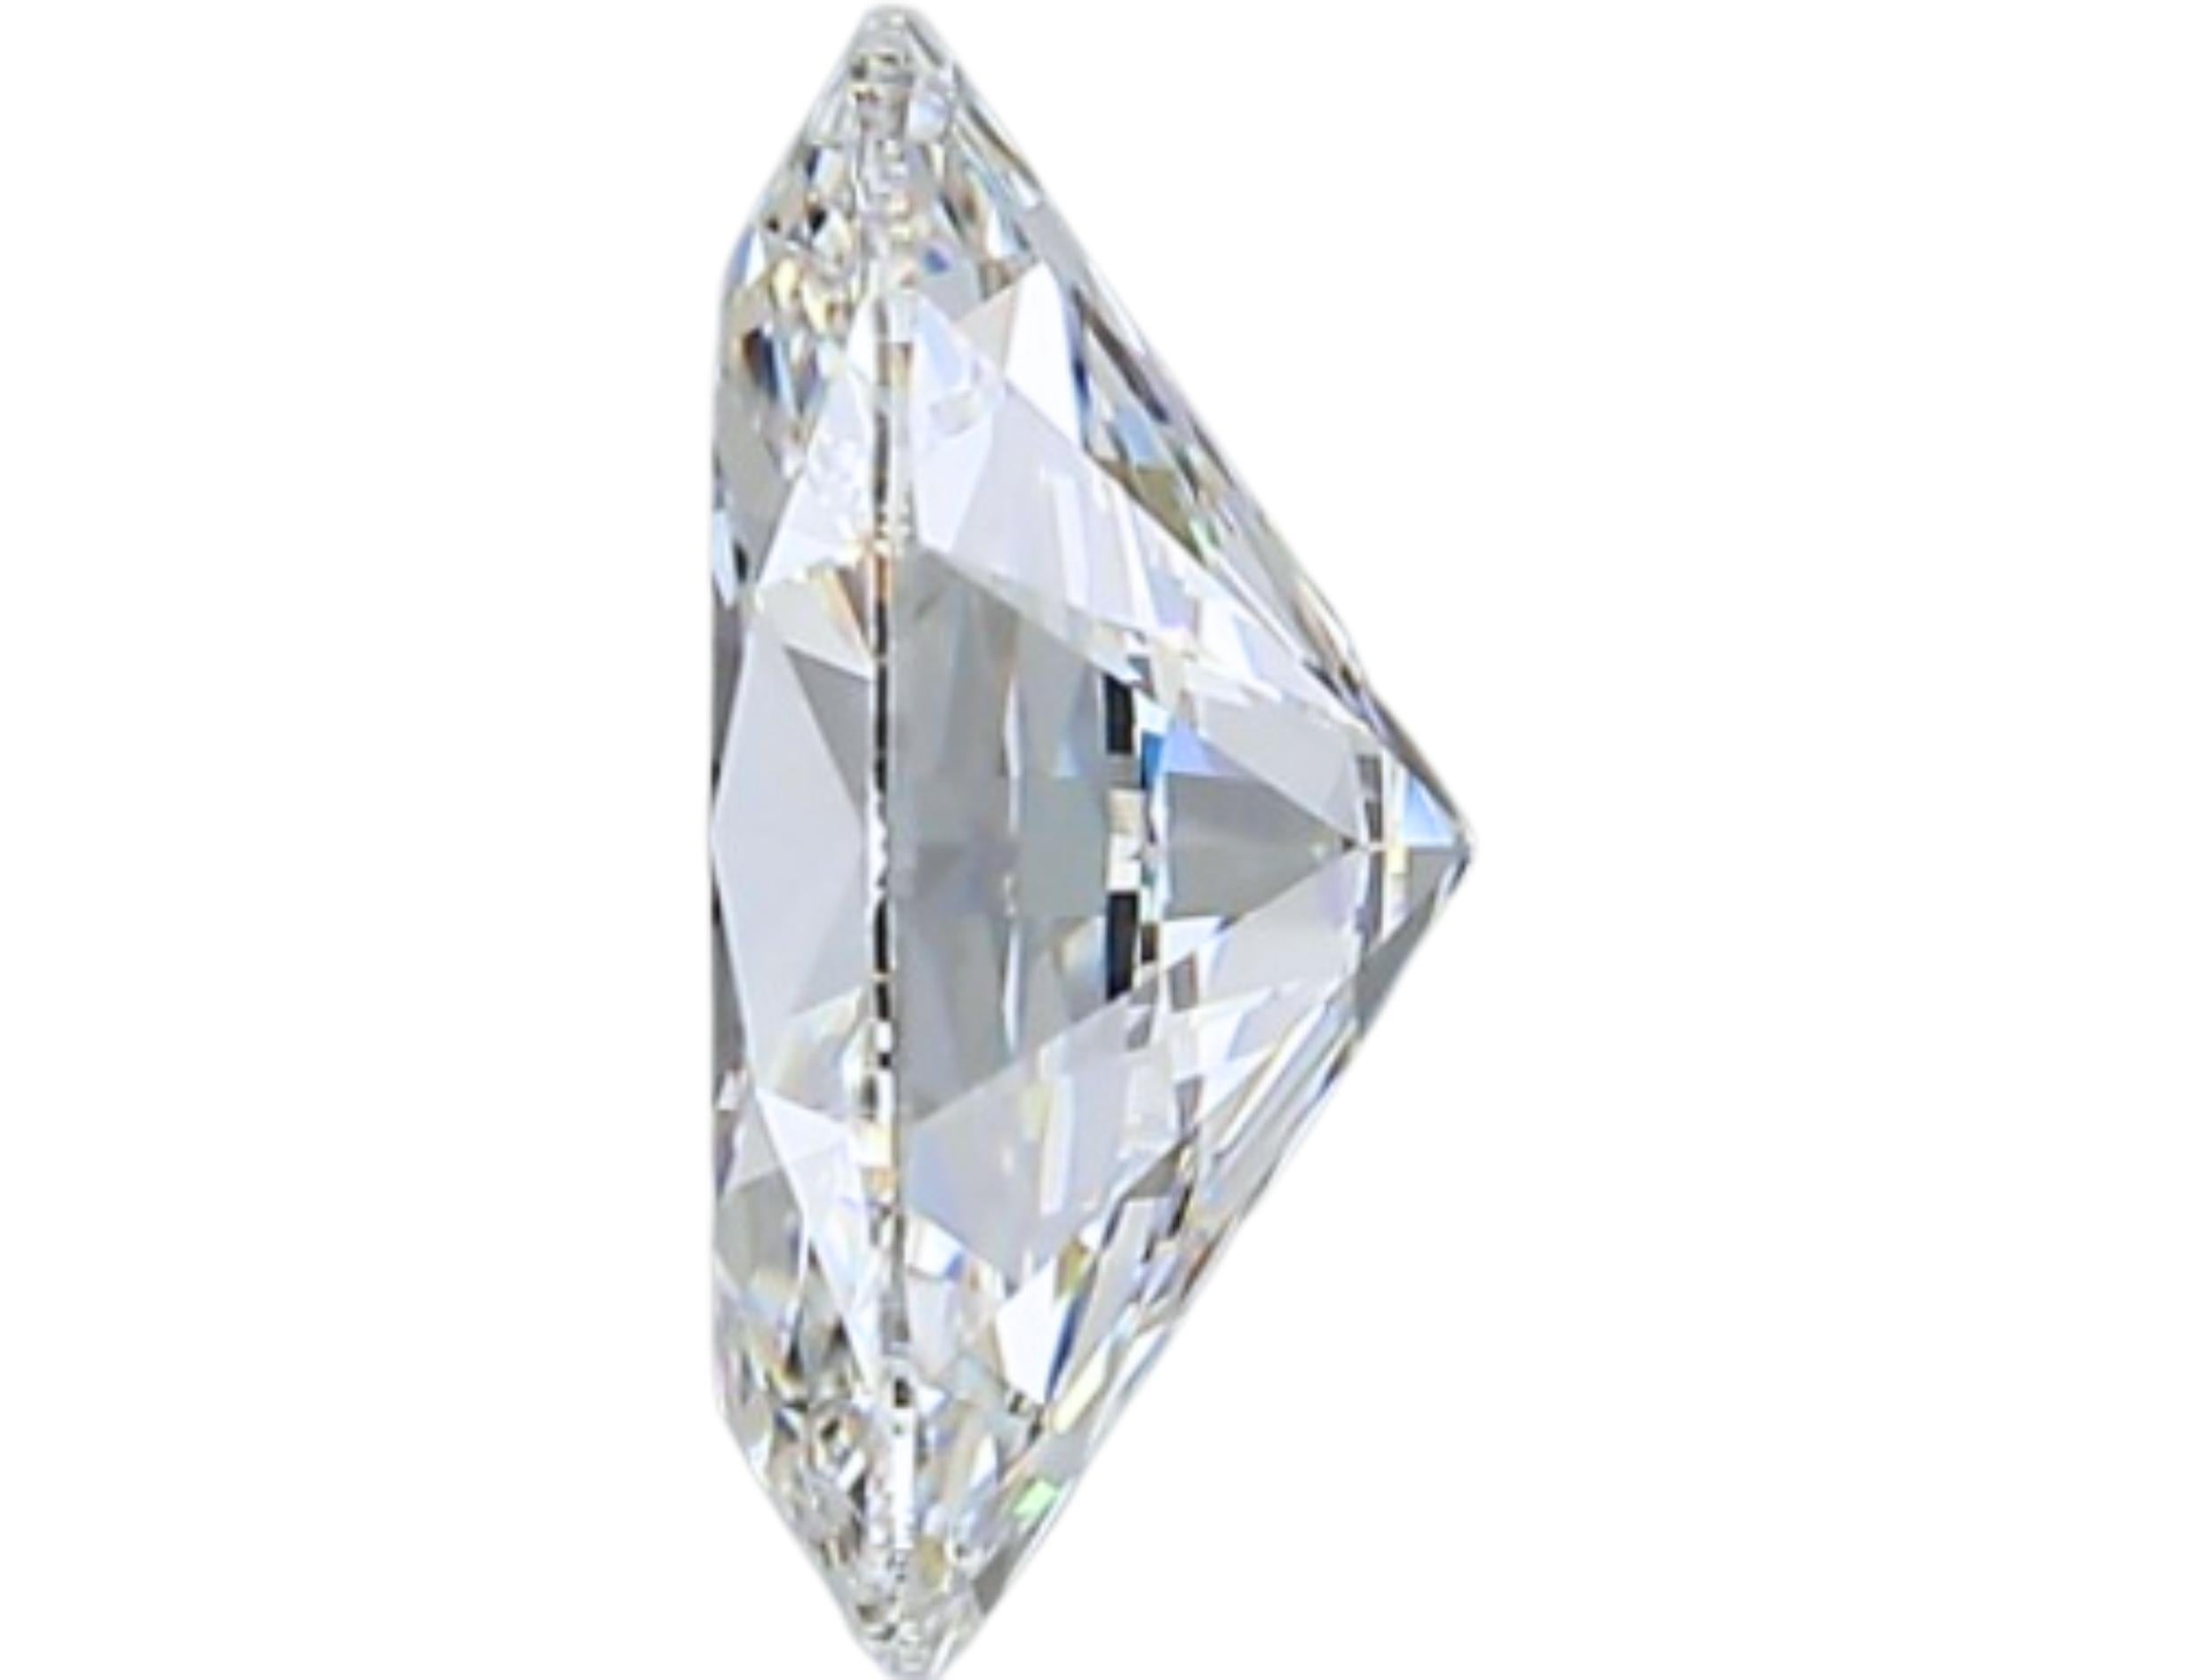 Women's Sparkling 1.73 carat Oval Cut Brilliant Diamond For Sale